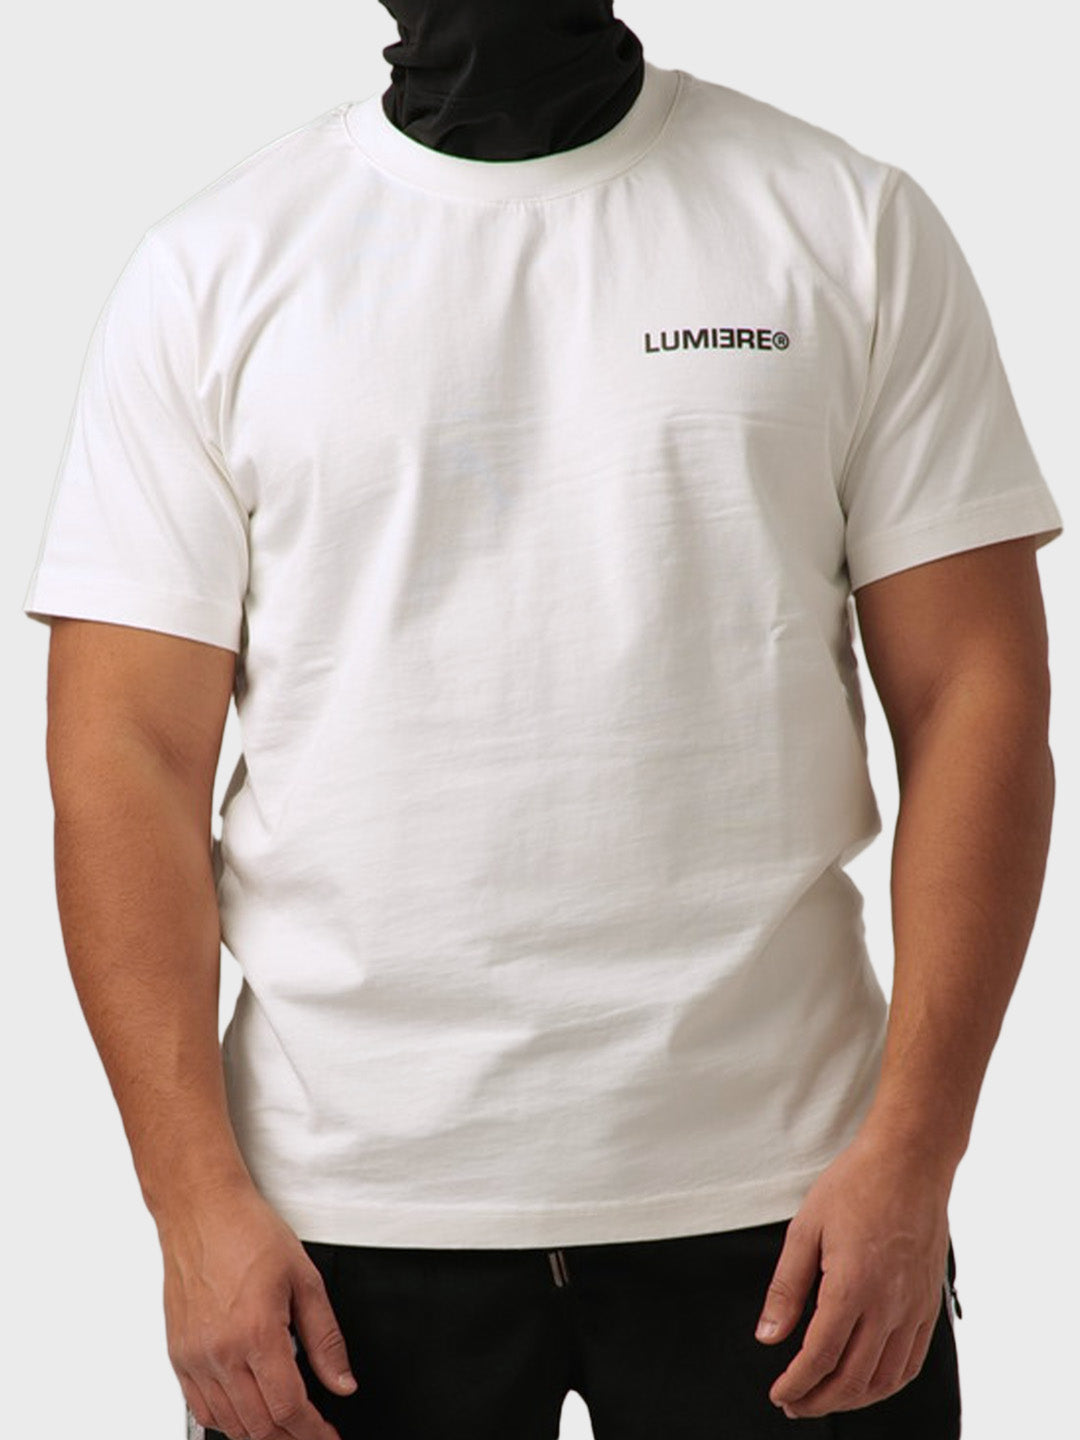 lumi3re plain t-shirt